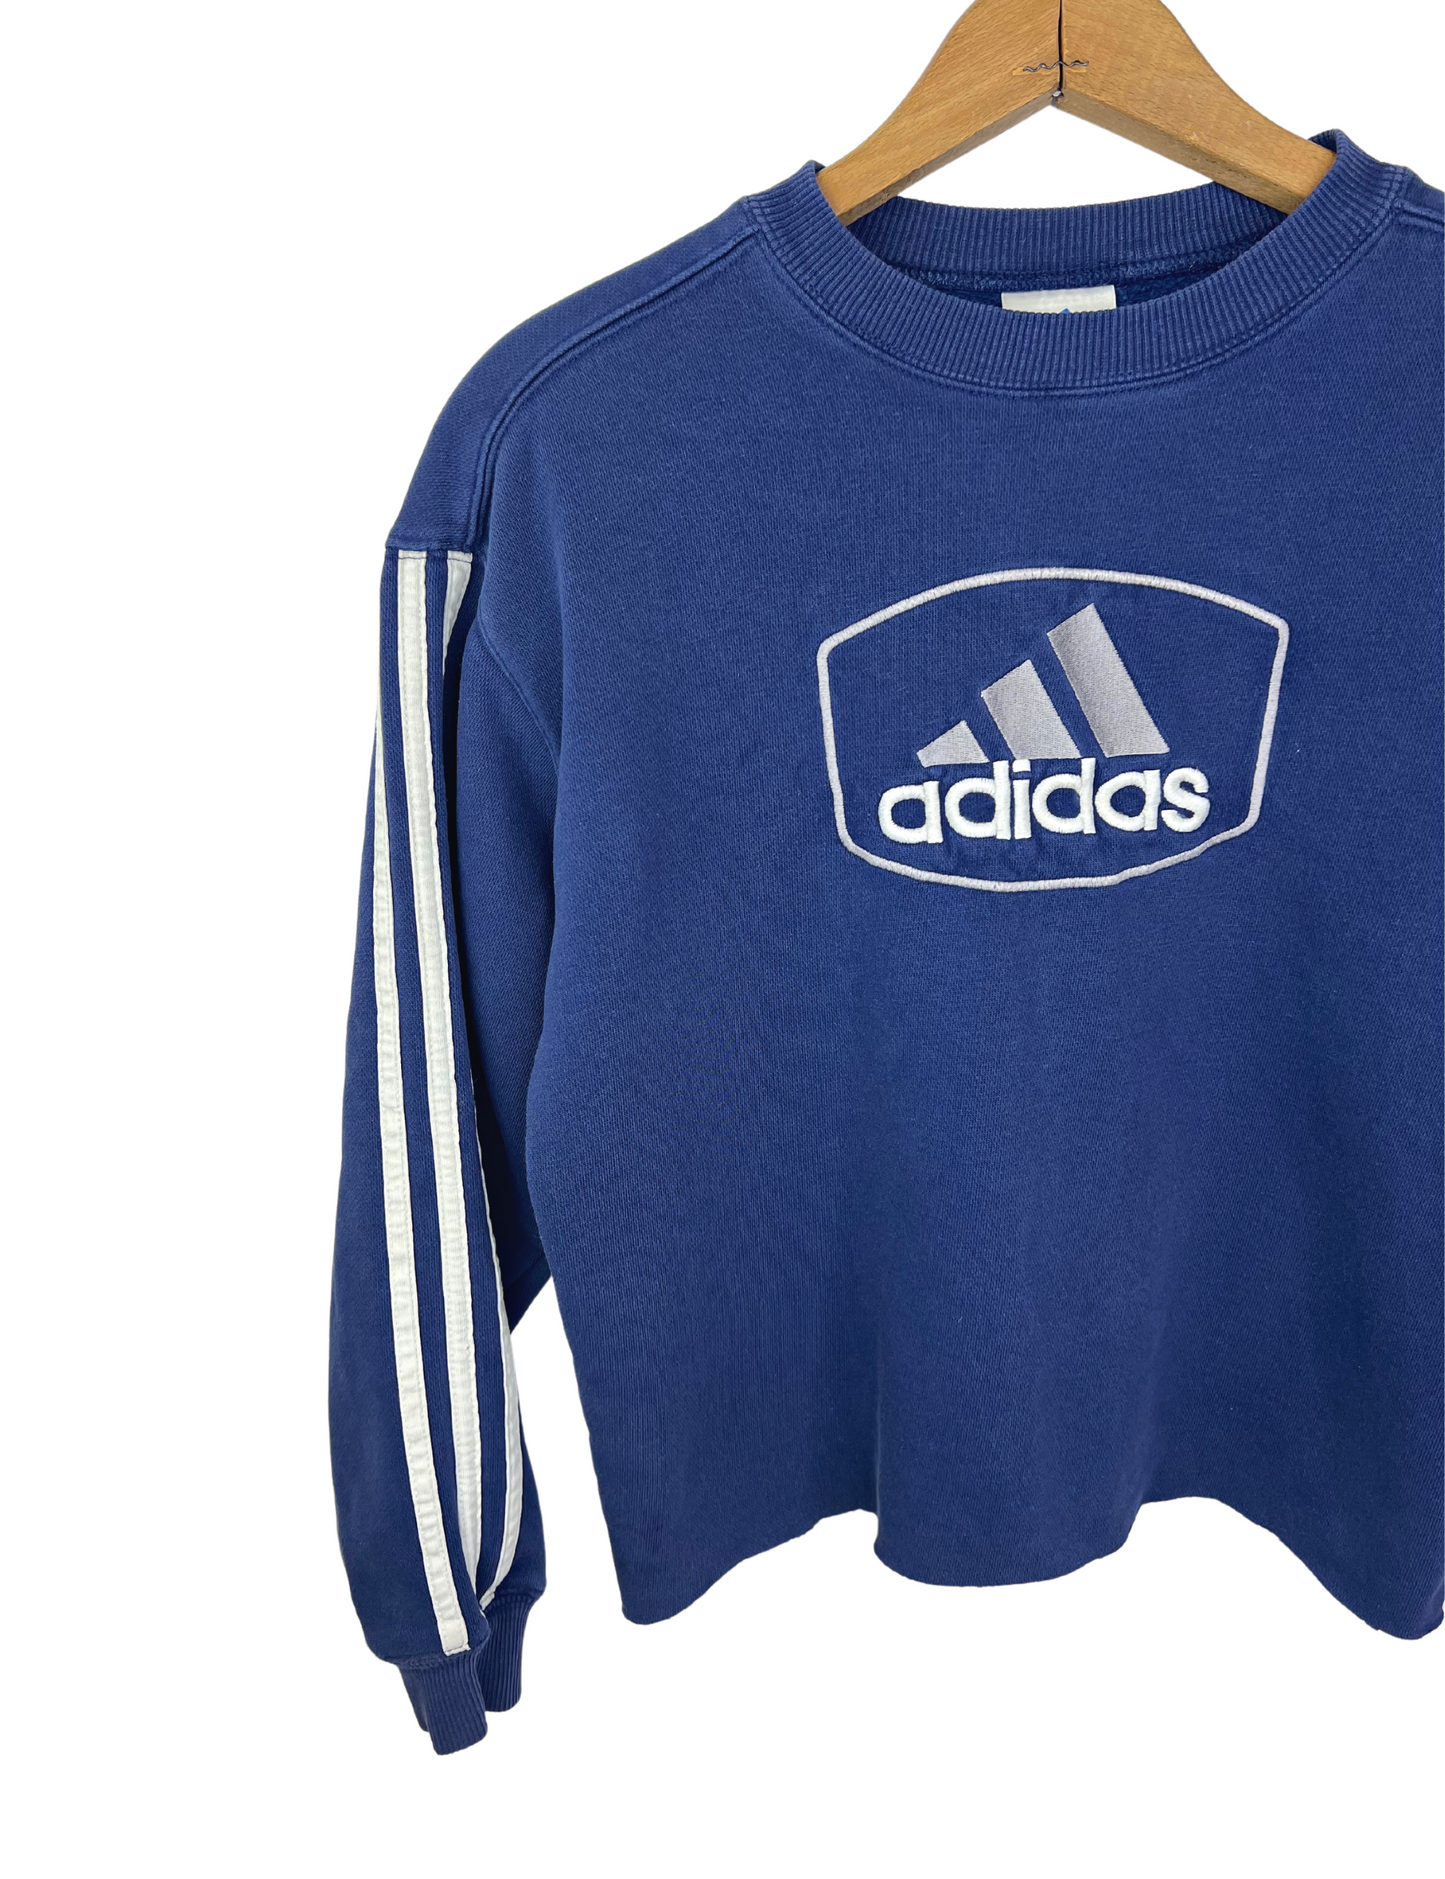 90’s Adidas Trefoil Logo Cropped Sweatshirt